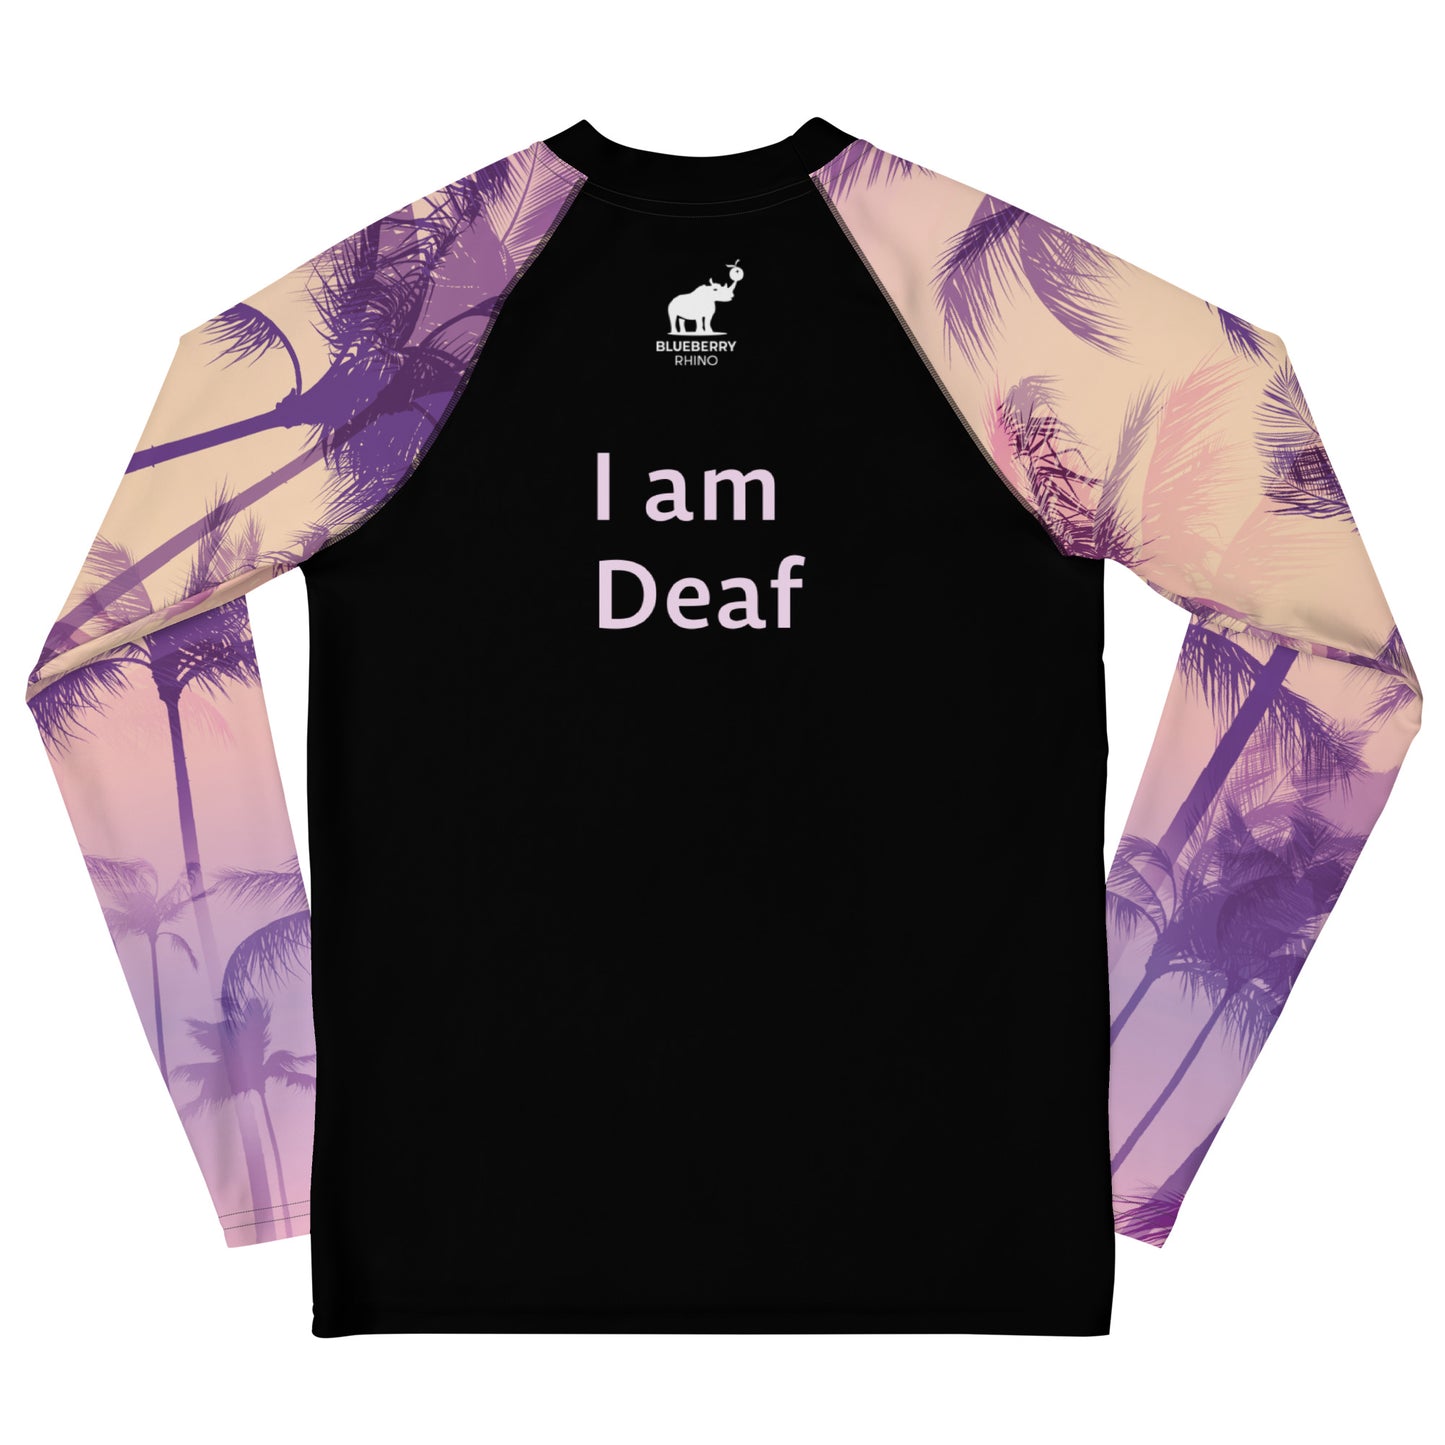 I am Deaf - Palm Youth Rash Guard